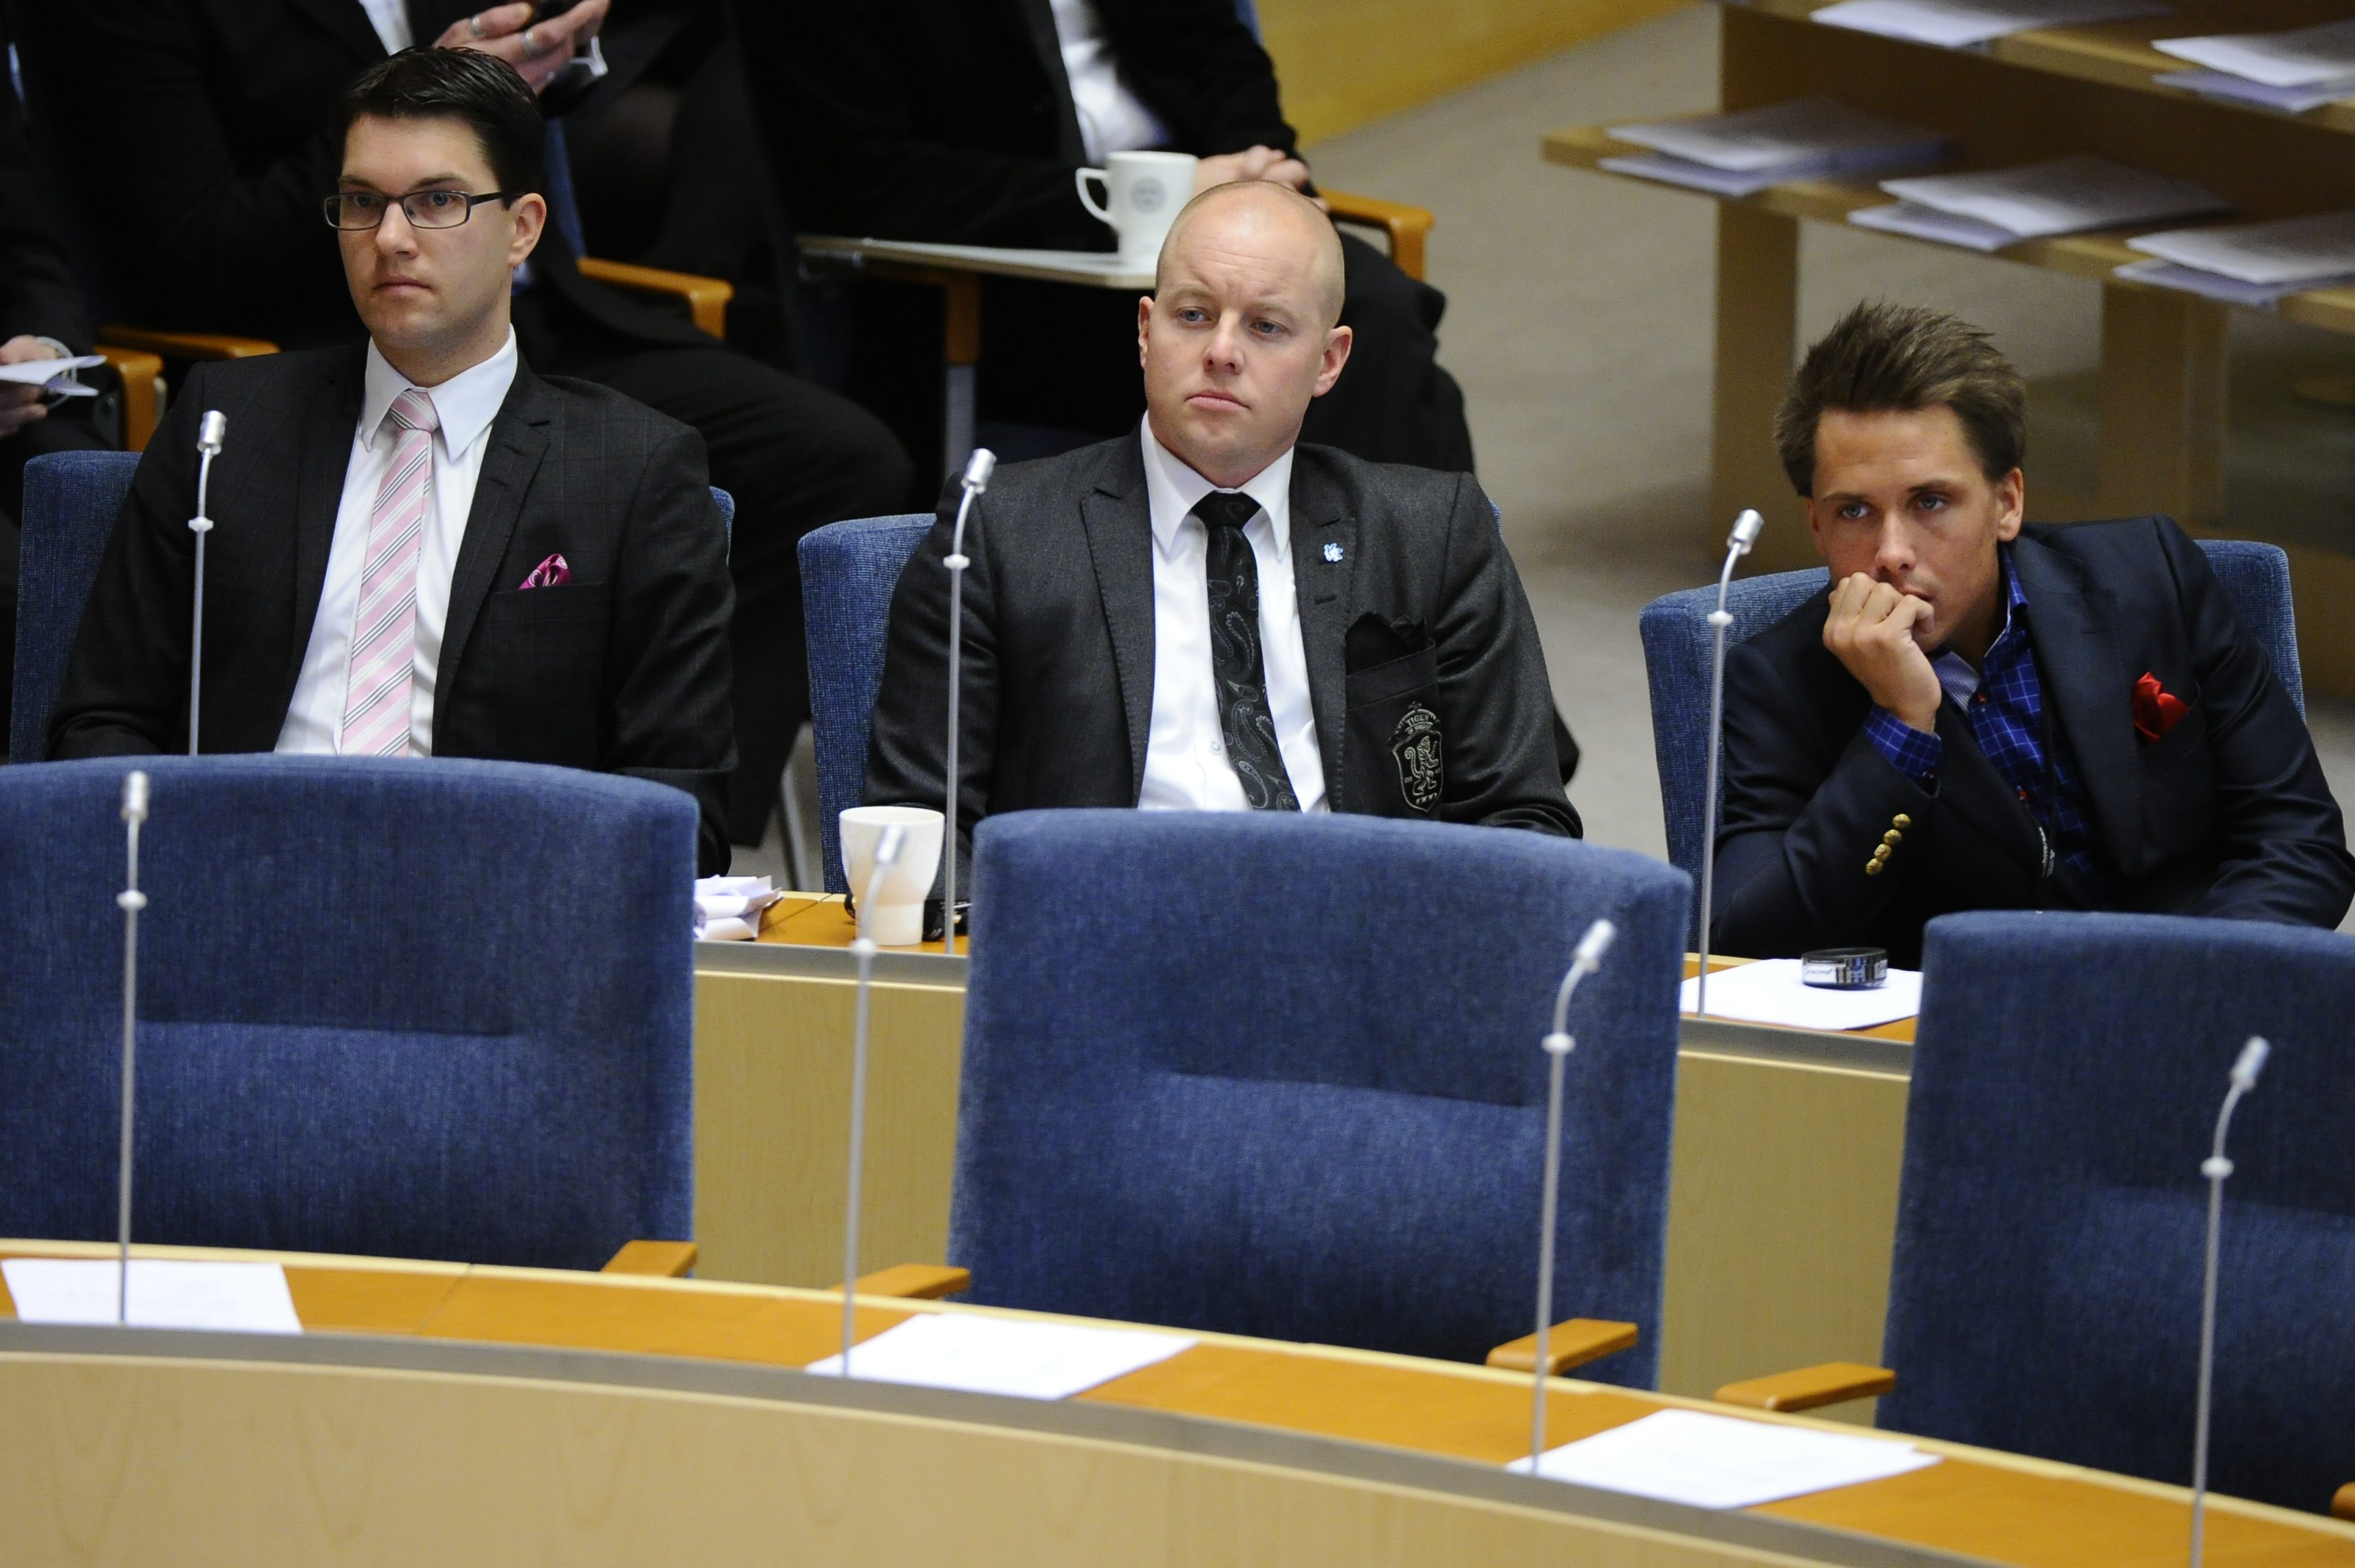 Politik, Erik Almqvist, Alkohol, Jimmie Åkesson, Sverigedemokraterna, William Petzäll